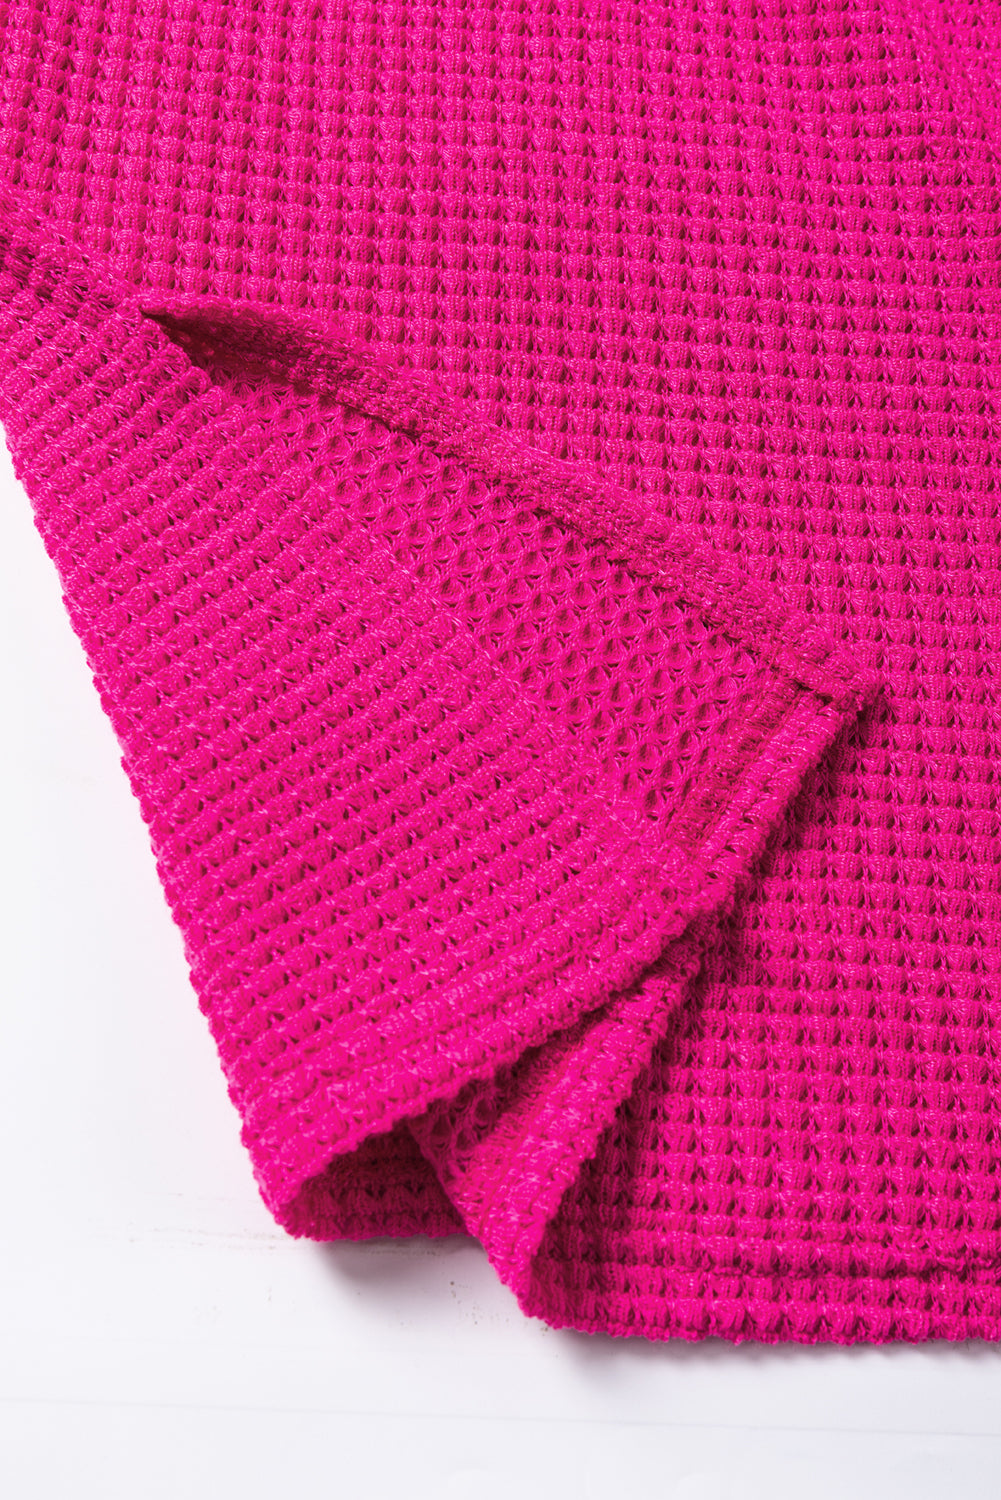 Rose Red Textured Center Seam Long Sleeve Split Top